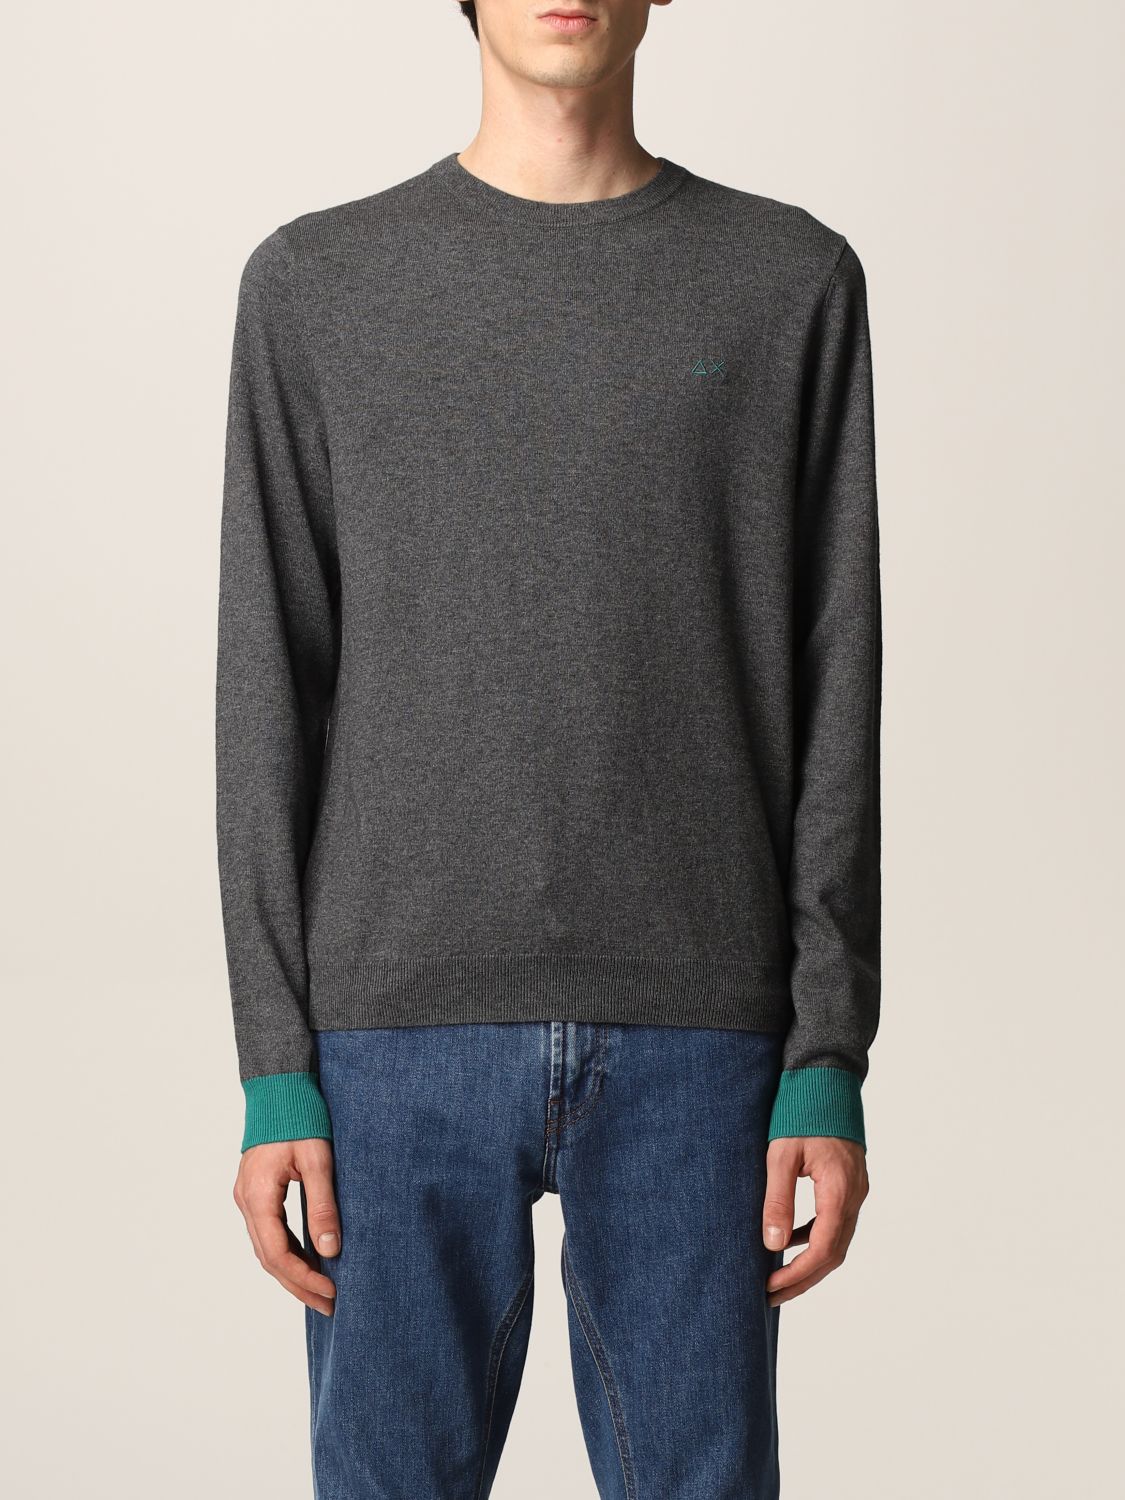 Sun 68 Outlet: sweater for man - Grey 1 | Sun 68 sweater K41110 online ...